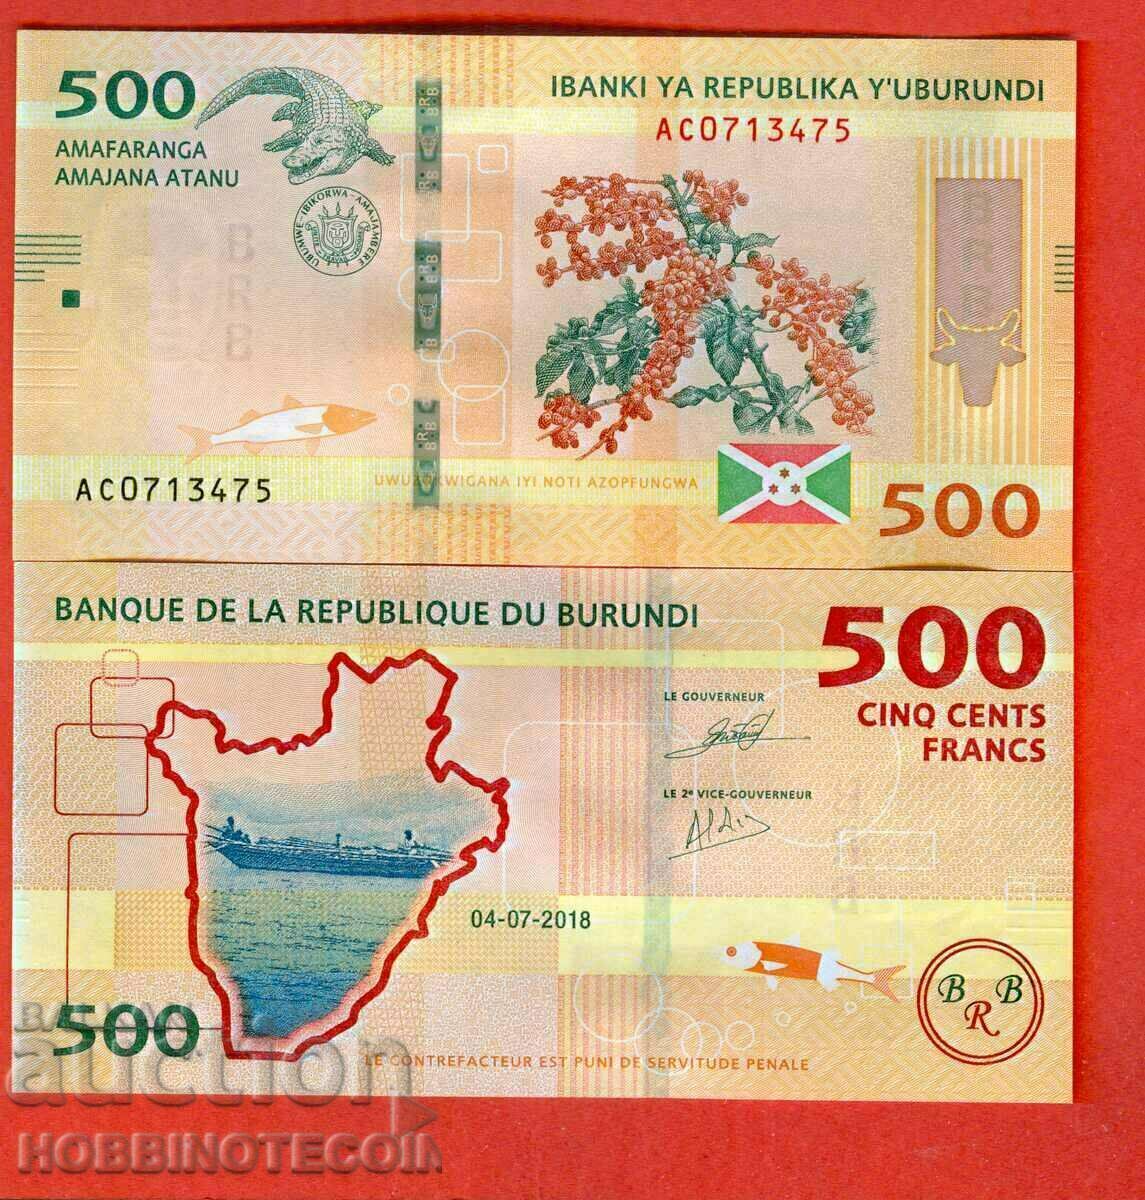 BURUNDI BURUNDI 500 Franc emisiune 2018 NOU UNC